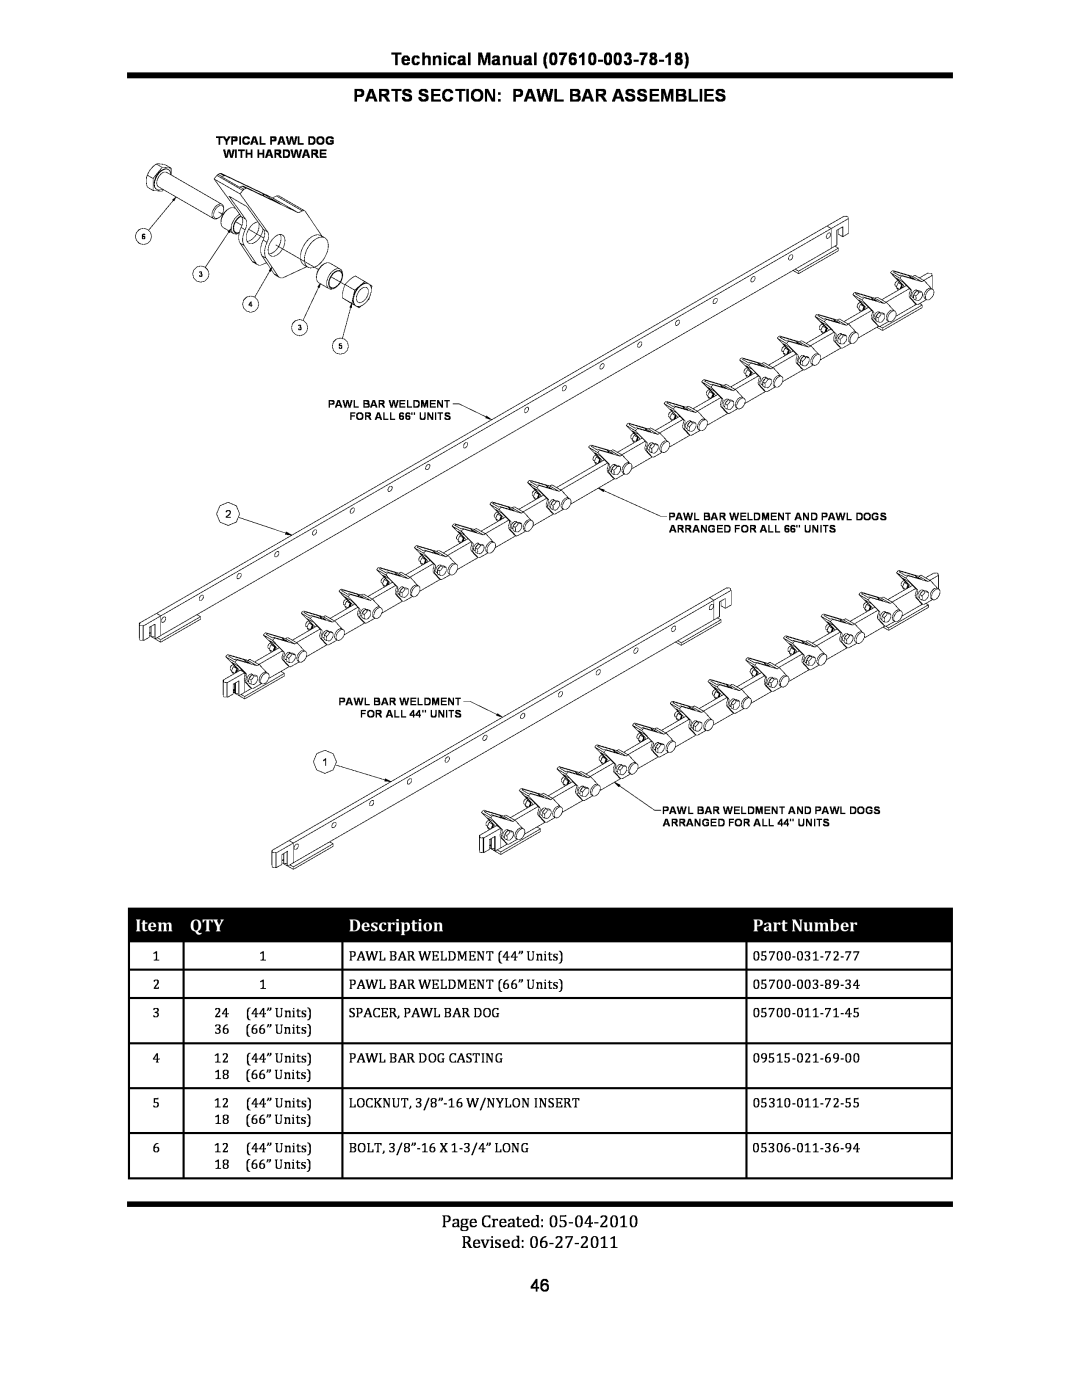 Jackson CREW 44S, CREW 66S manual Technical Manual PARTS SECTION PAWL BAR ASSEMBLIES, Description, Part Number 